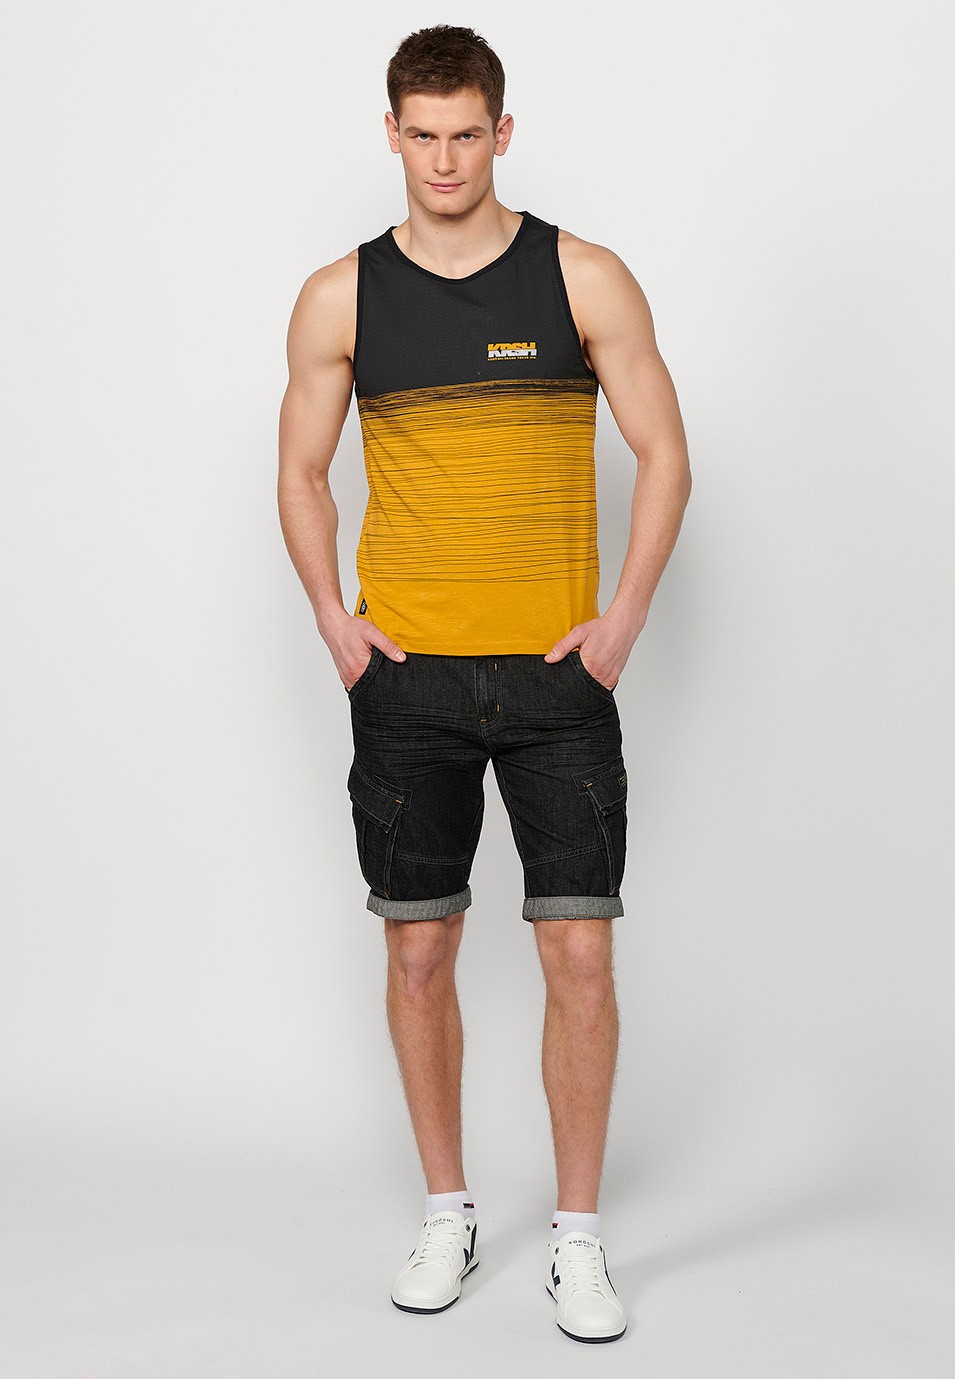 Tank top, yellow gradient print, for men